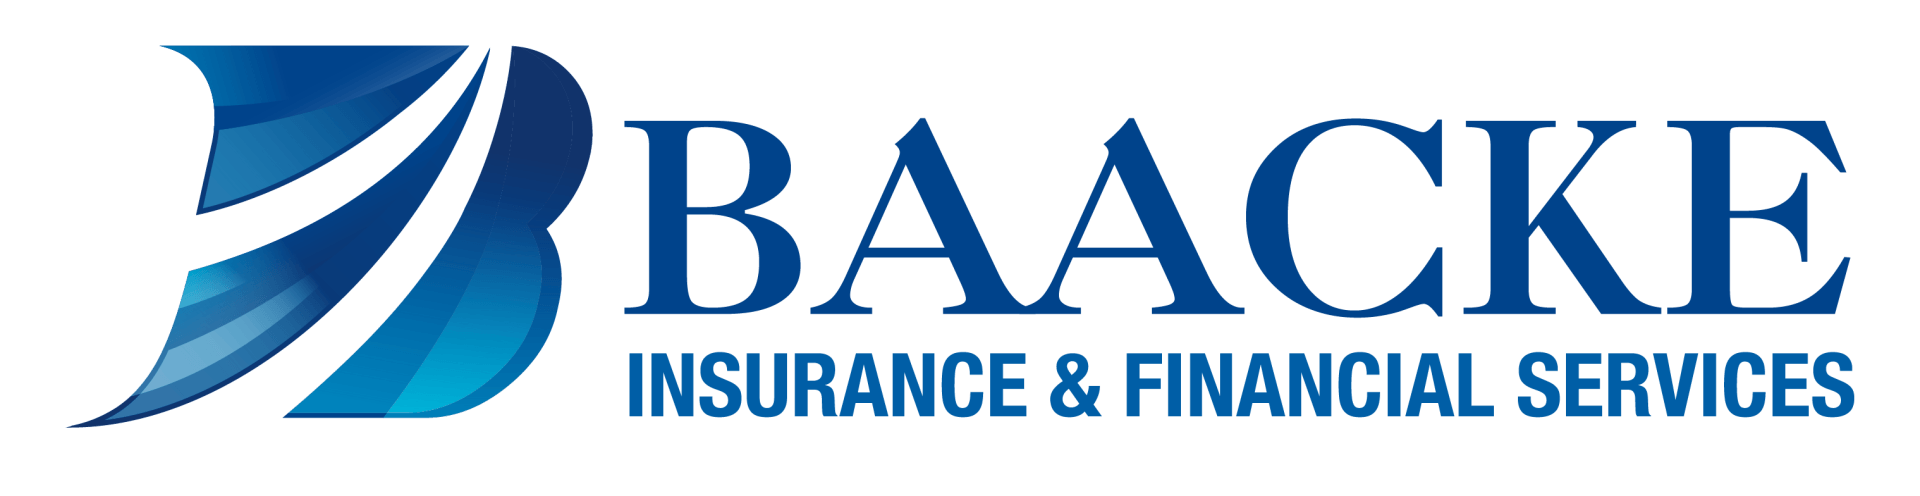 Baacke Insurance & Financial Services